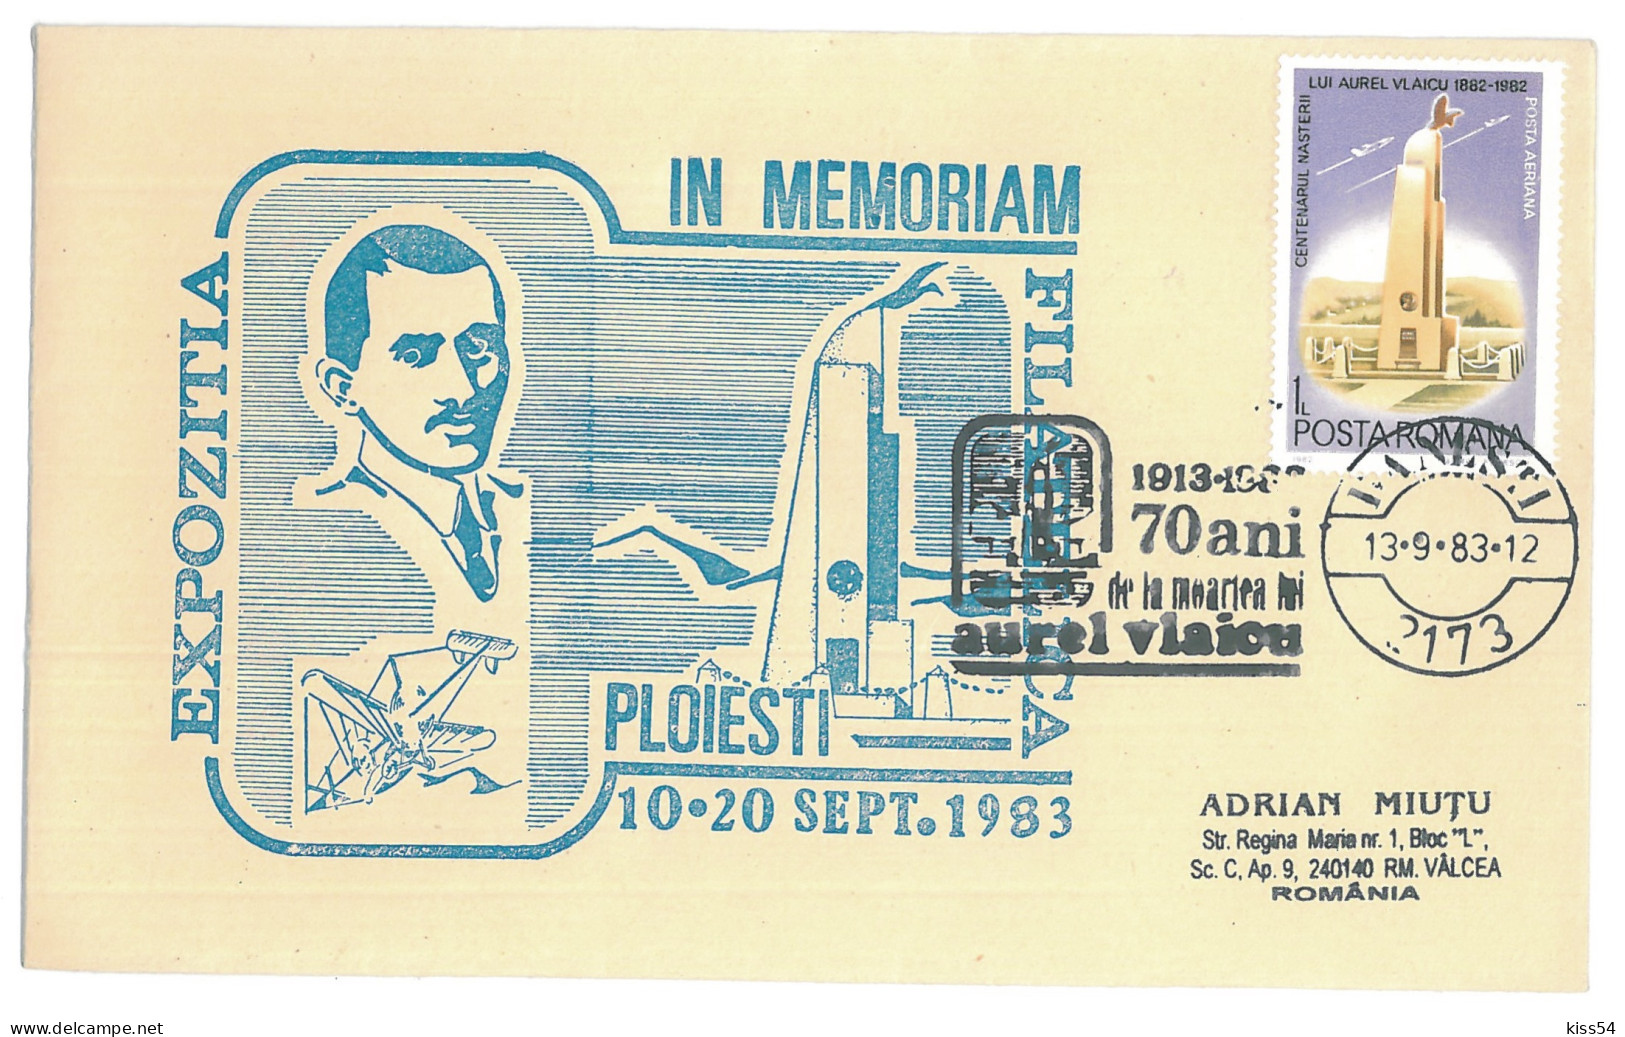 COV 38 - 290 AIRPLANE, Aurel Vlaicu, Romania - Cover - Used - 1983 - Storia Postale